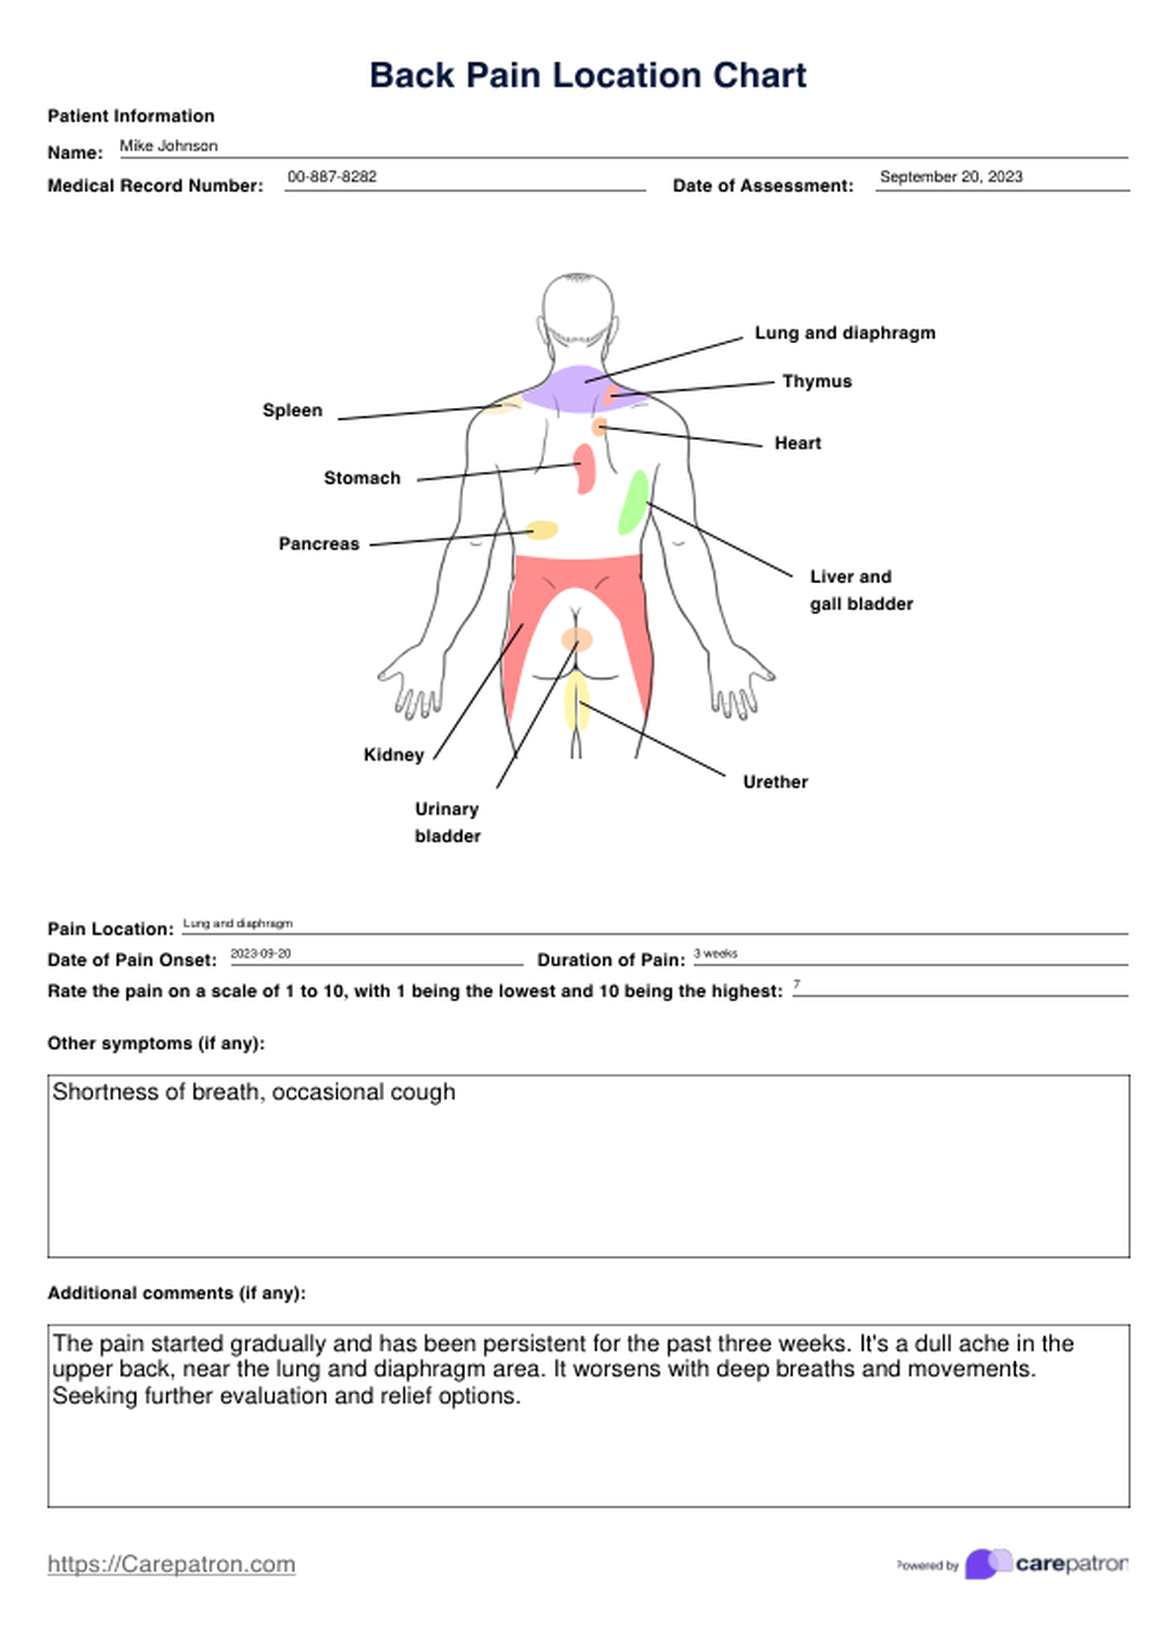 Back Pain Location Charts PDF Example